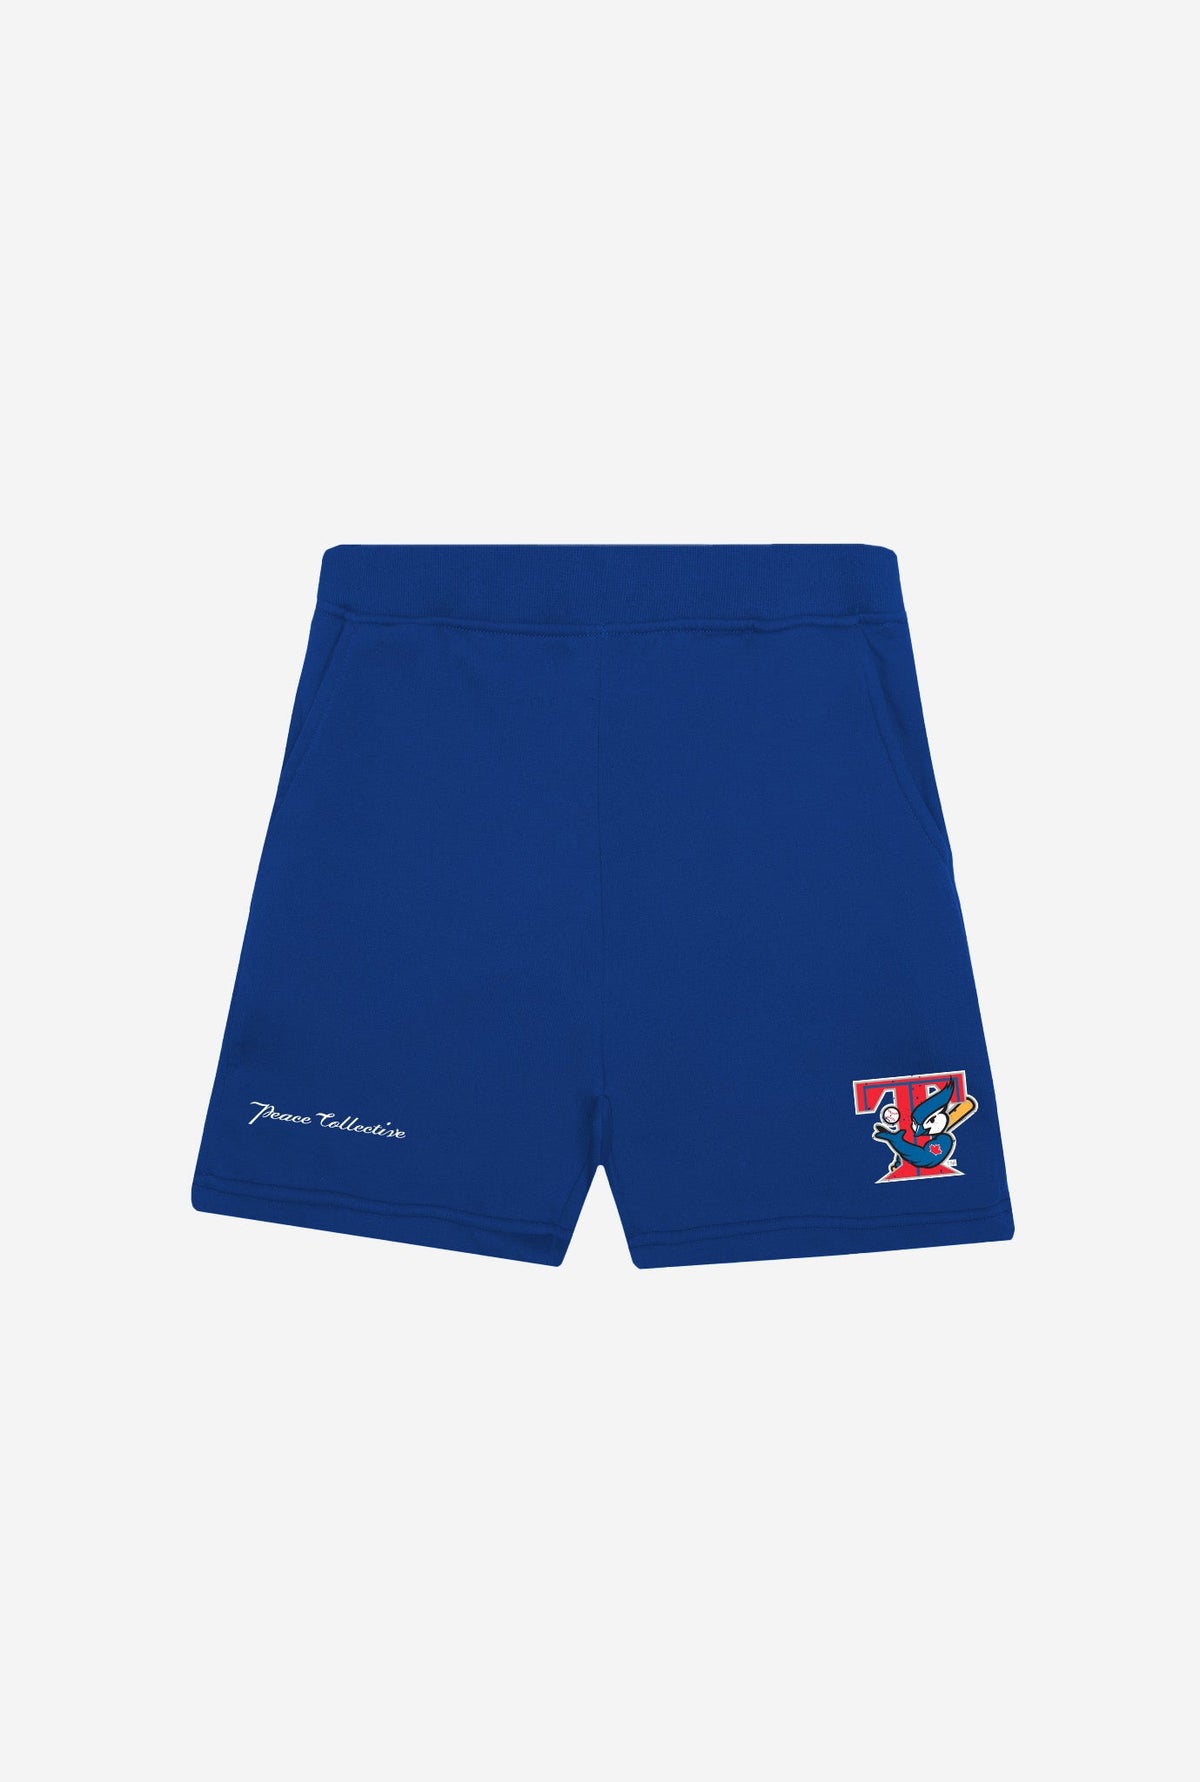 Toronto Blue Jays Vintage Fleece Shorts - Royal